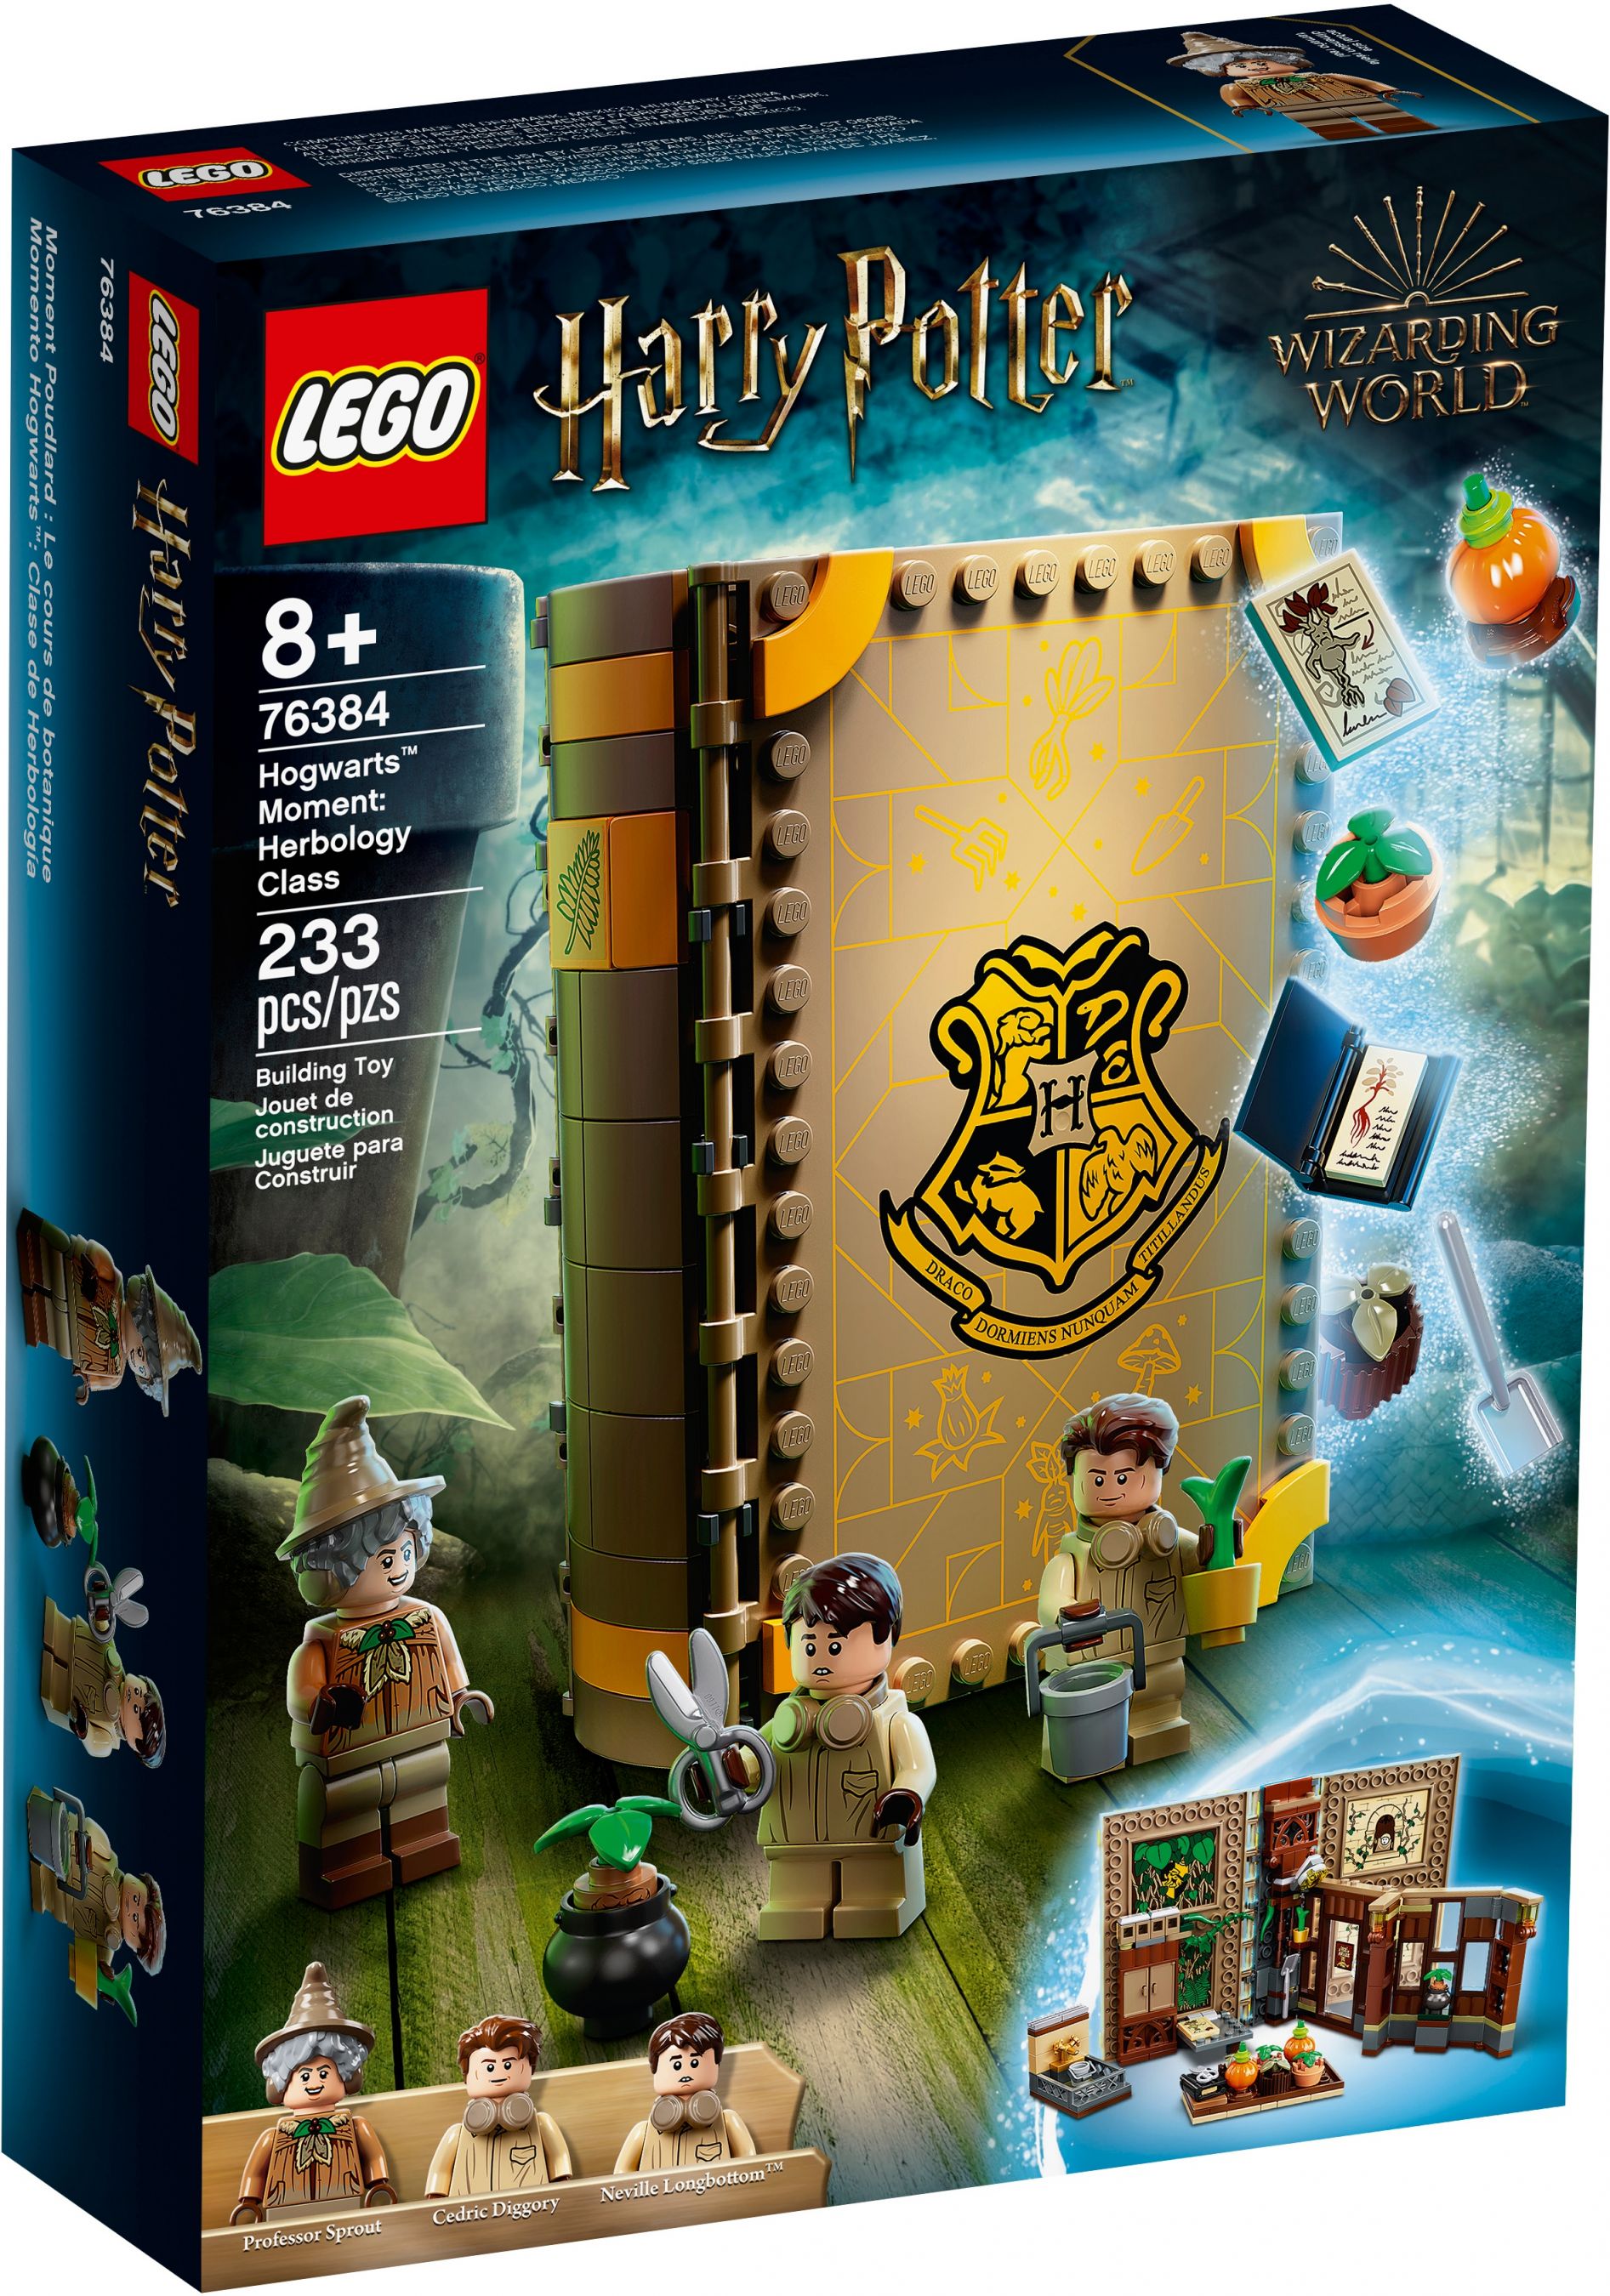 LEGO Harry Potter 76384 Hogwarts™ Moment: Kräuterkundeunterricht LEGO_76384_alt1.jpg